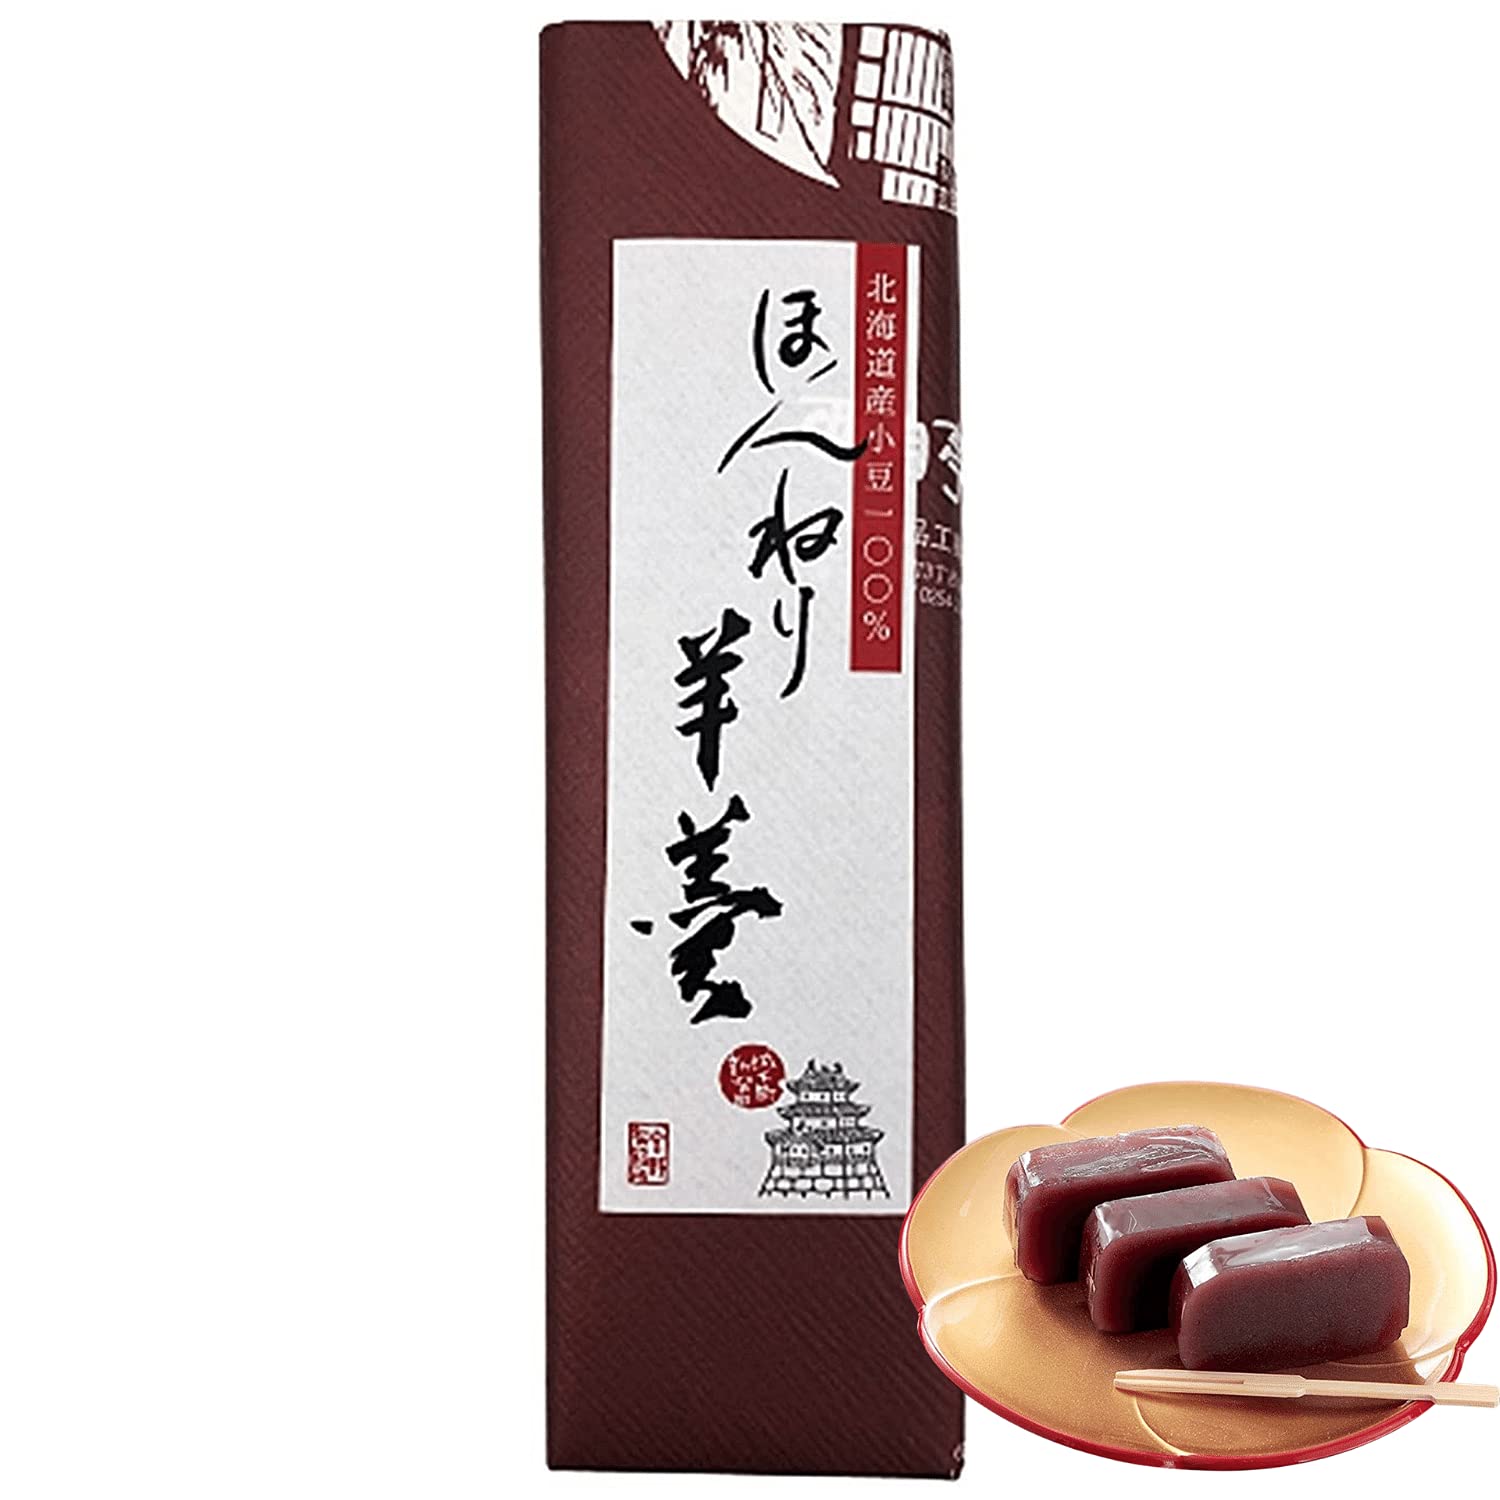 Red Bean Paste Japanese Mochi Rice Cake Anko, Strained Koshian-Vegan 500g |  eBay